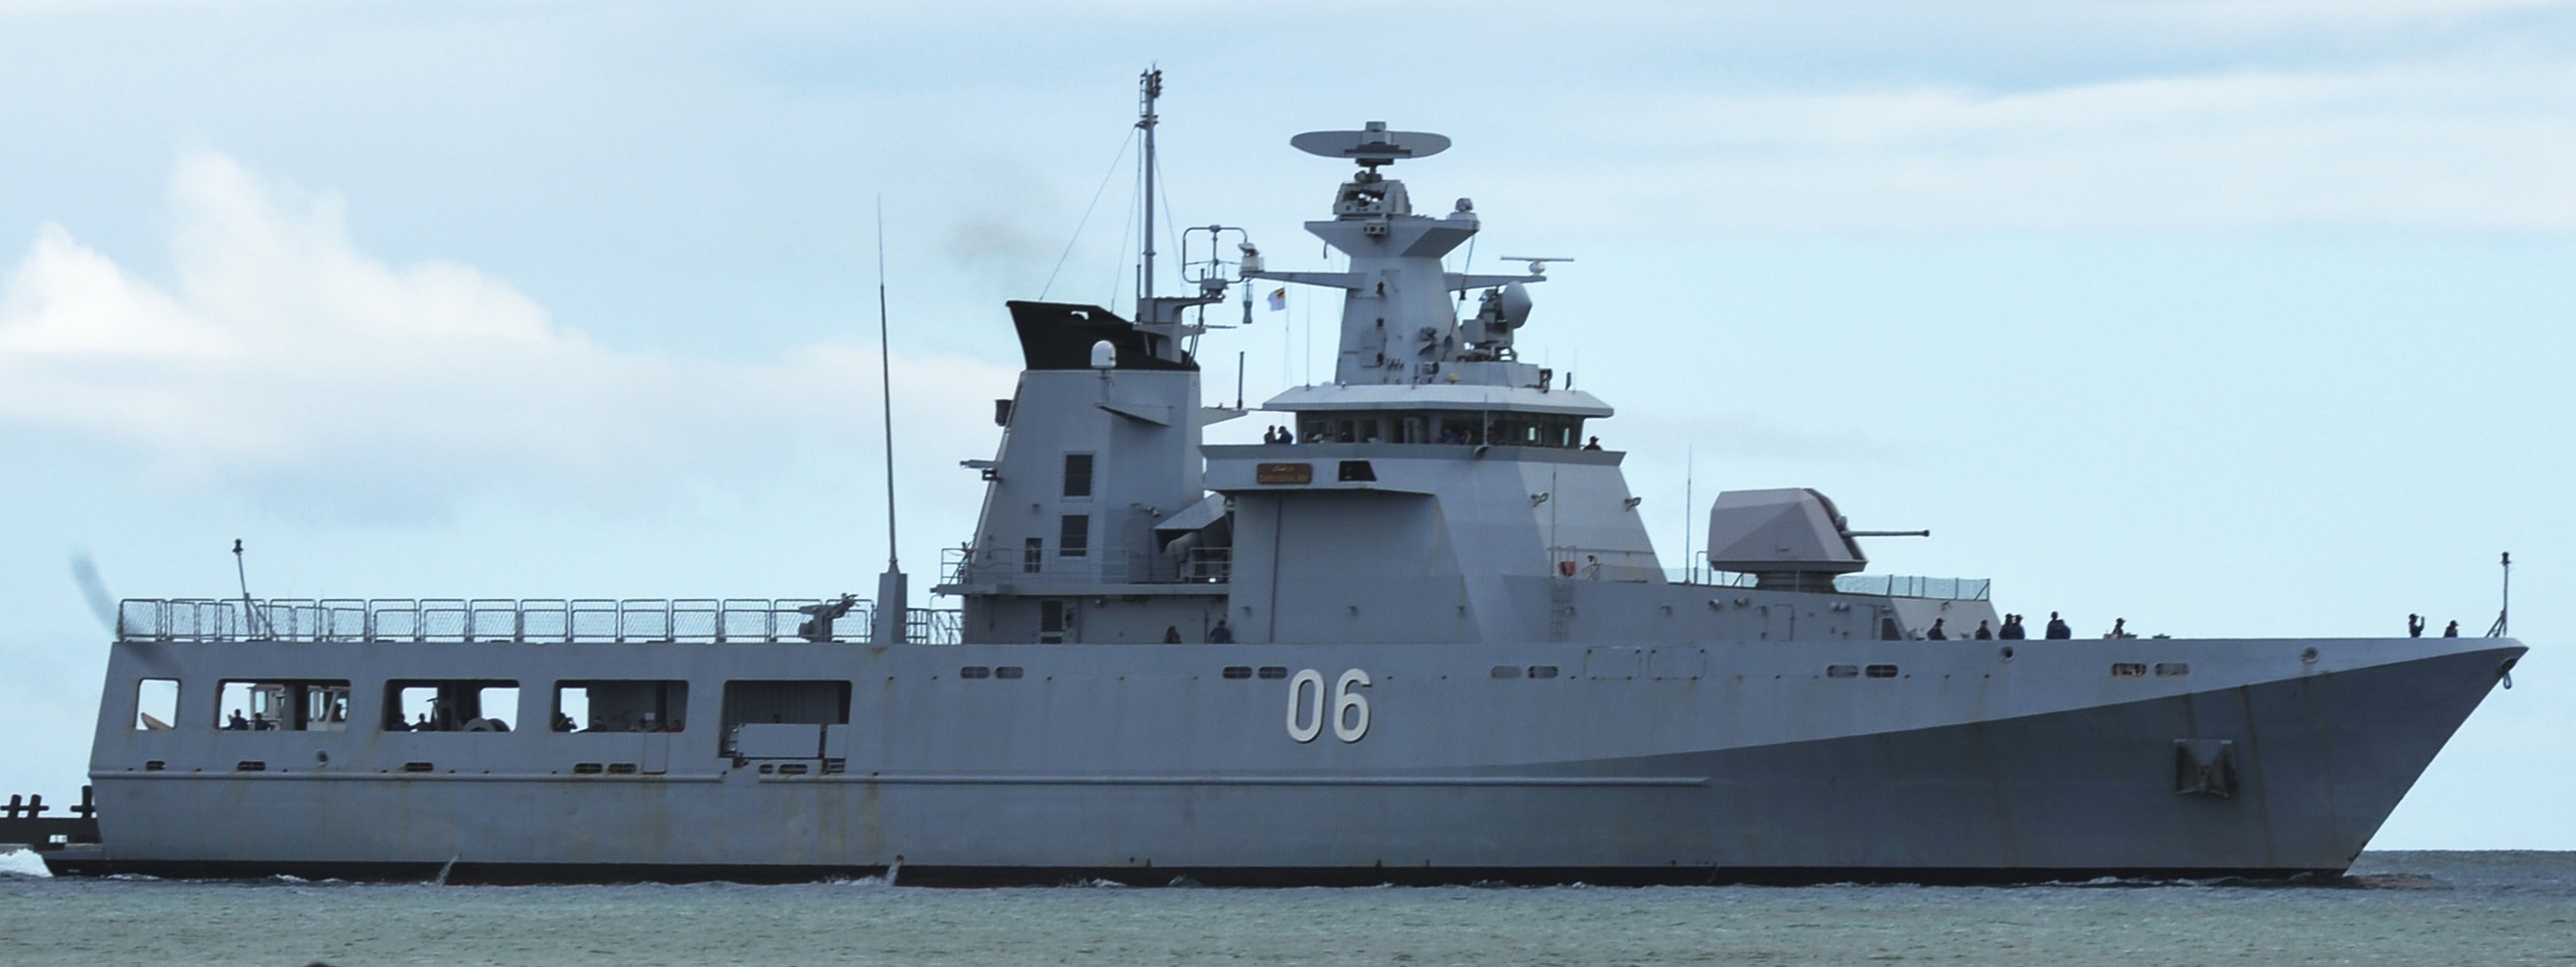 opv 06 kdb darussalam offshore patrol vessel royal brunei navy 04